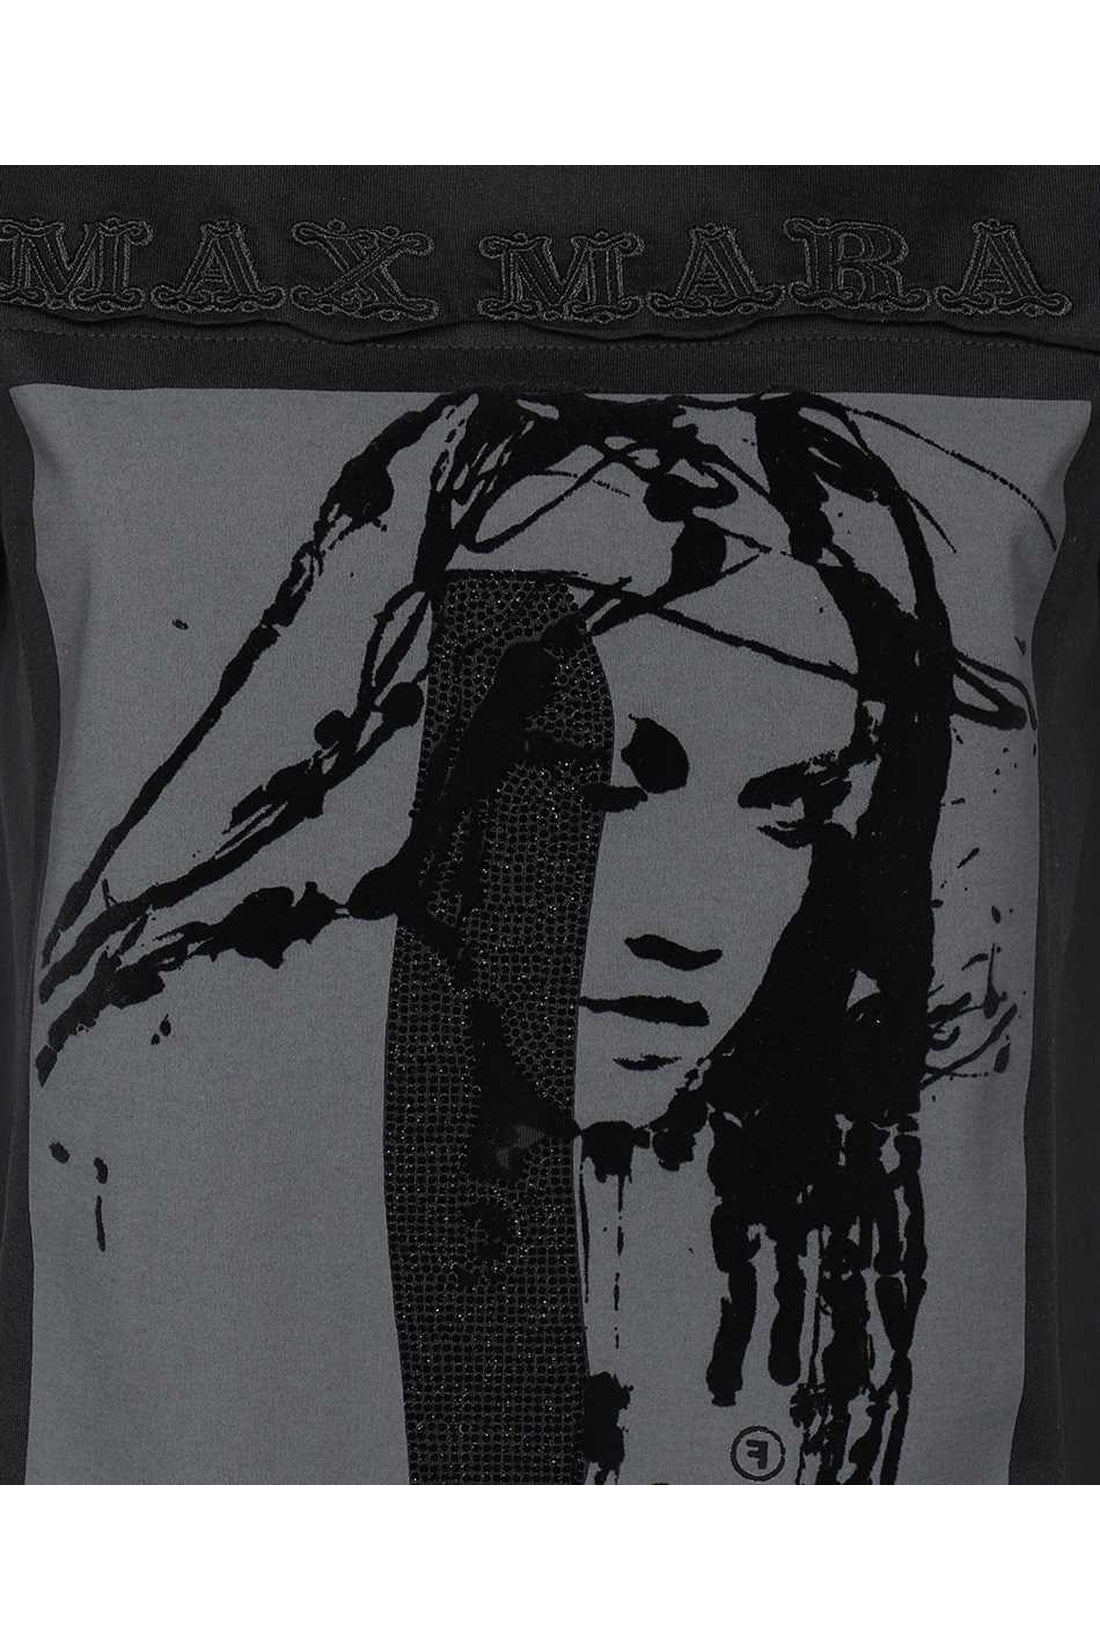 Max Mara-OUTLET-SALE-Darling cotton T-shirt-ARCHIVIST